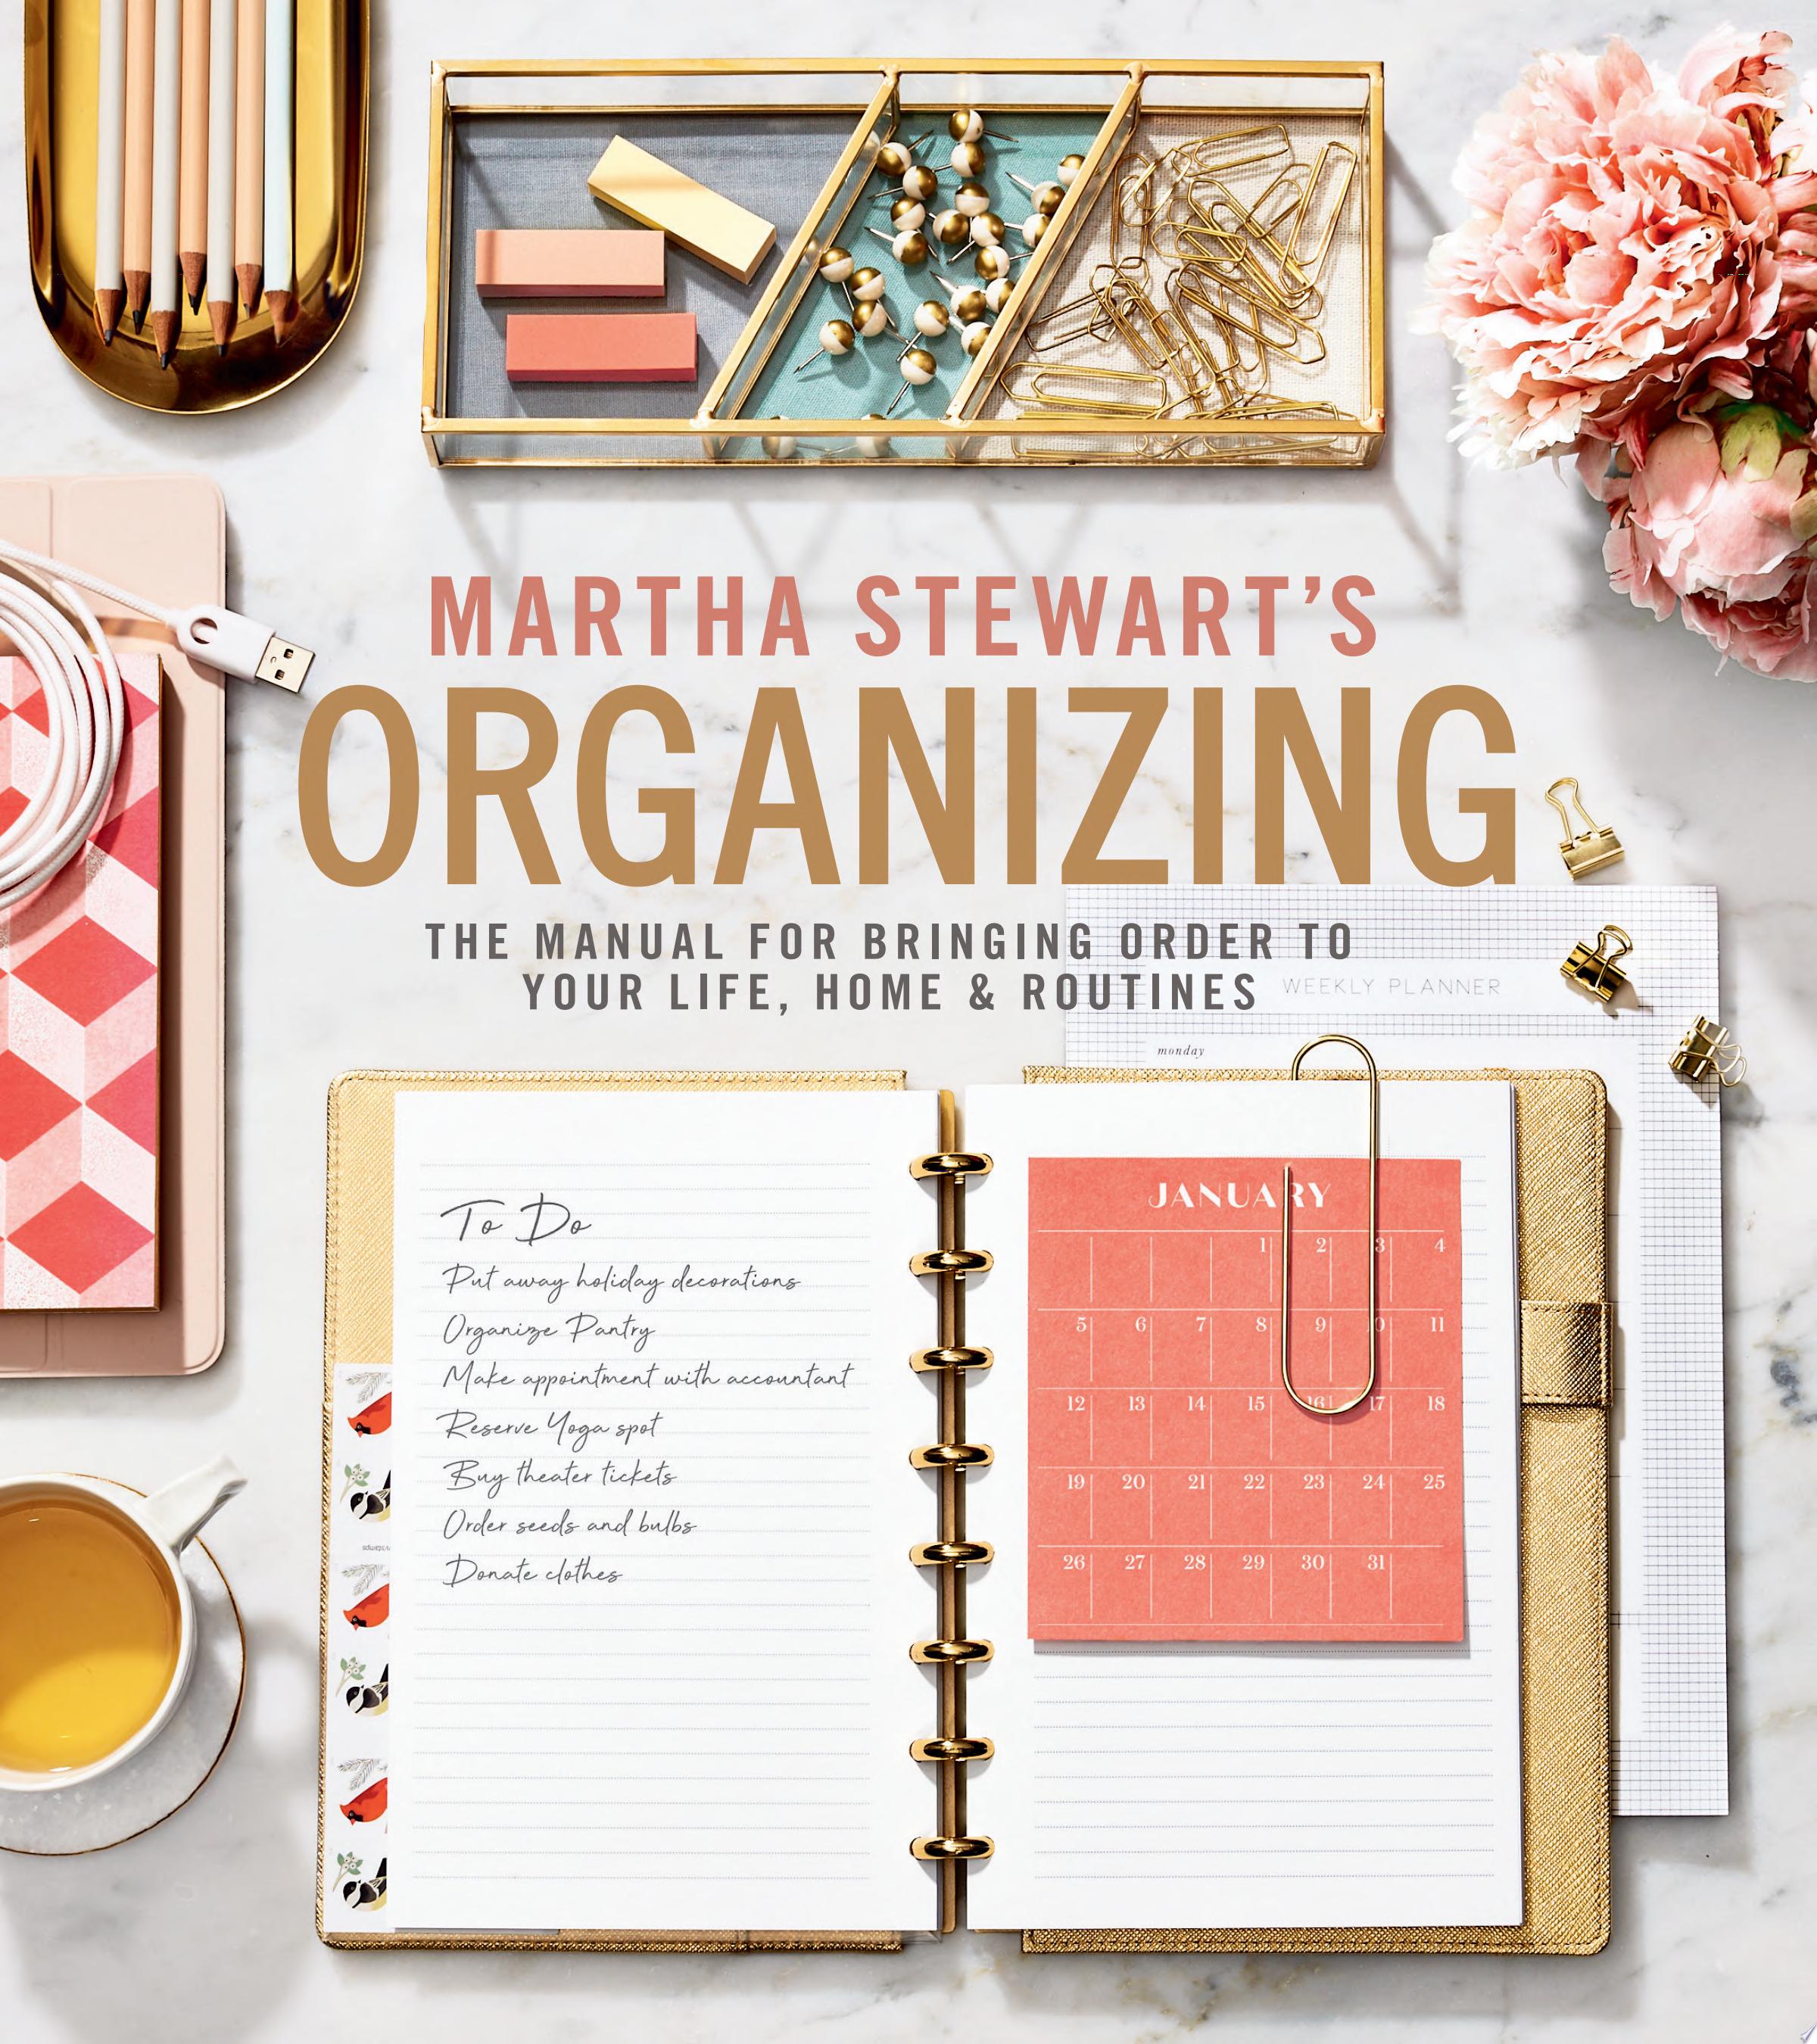 Image for "Martha Stewart's Organizing"